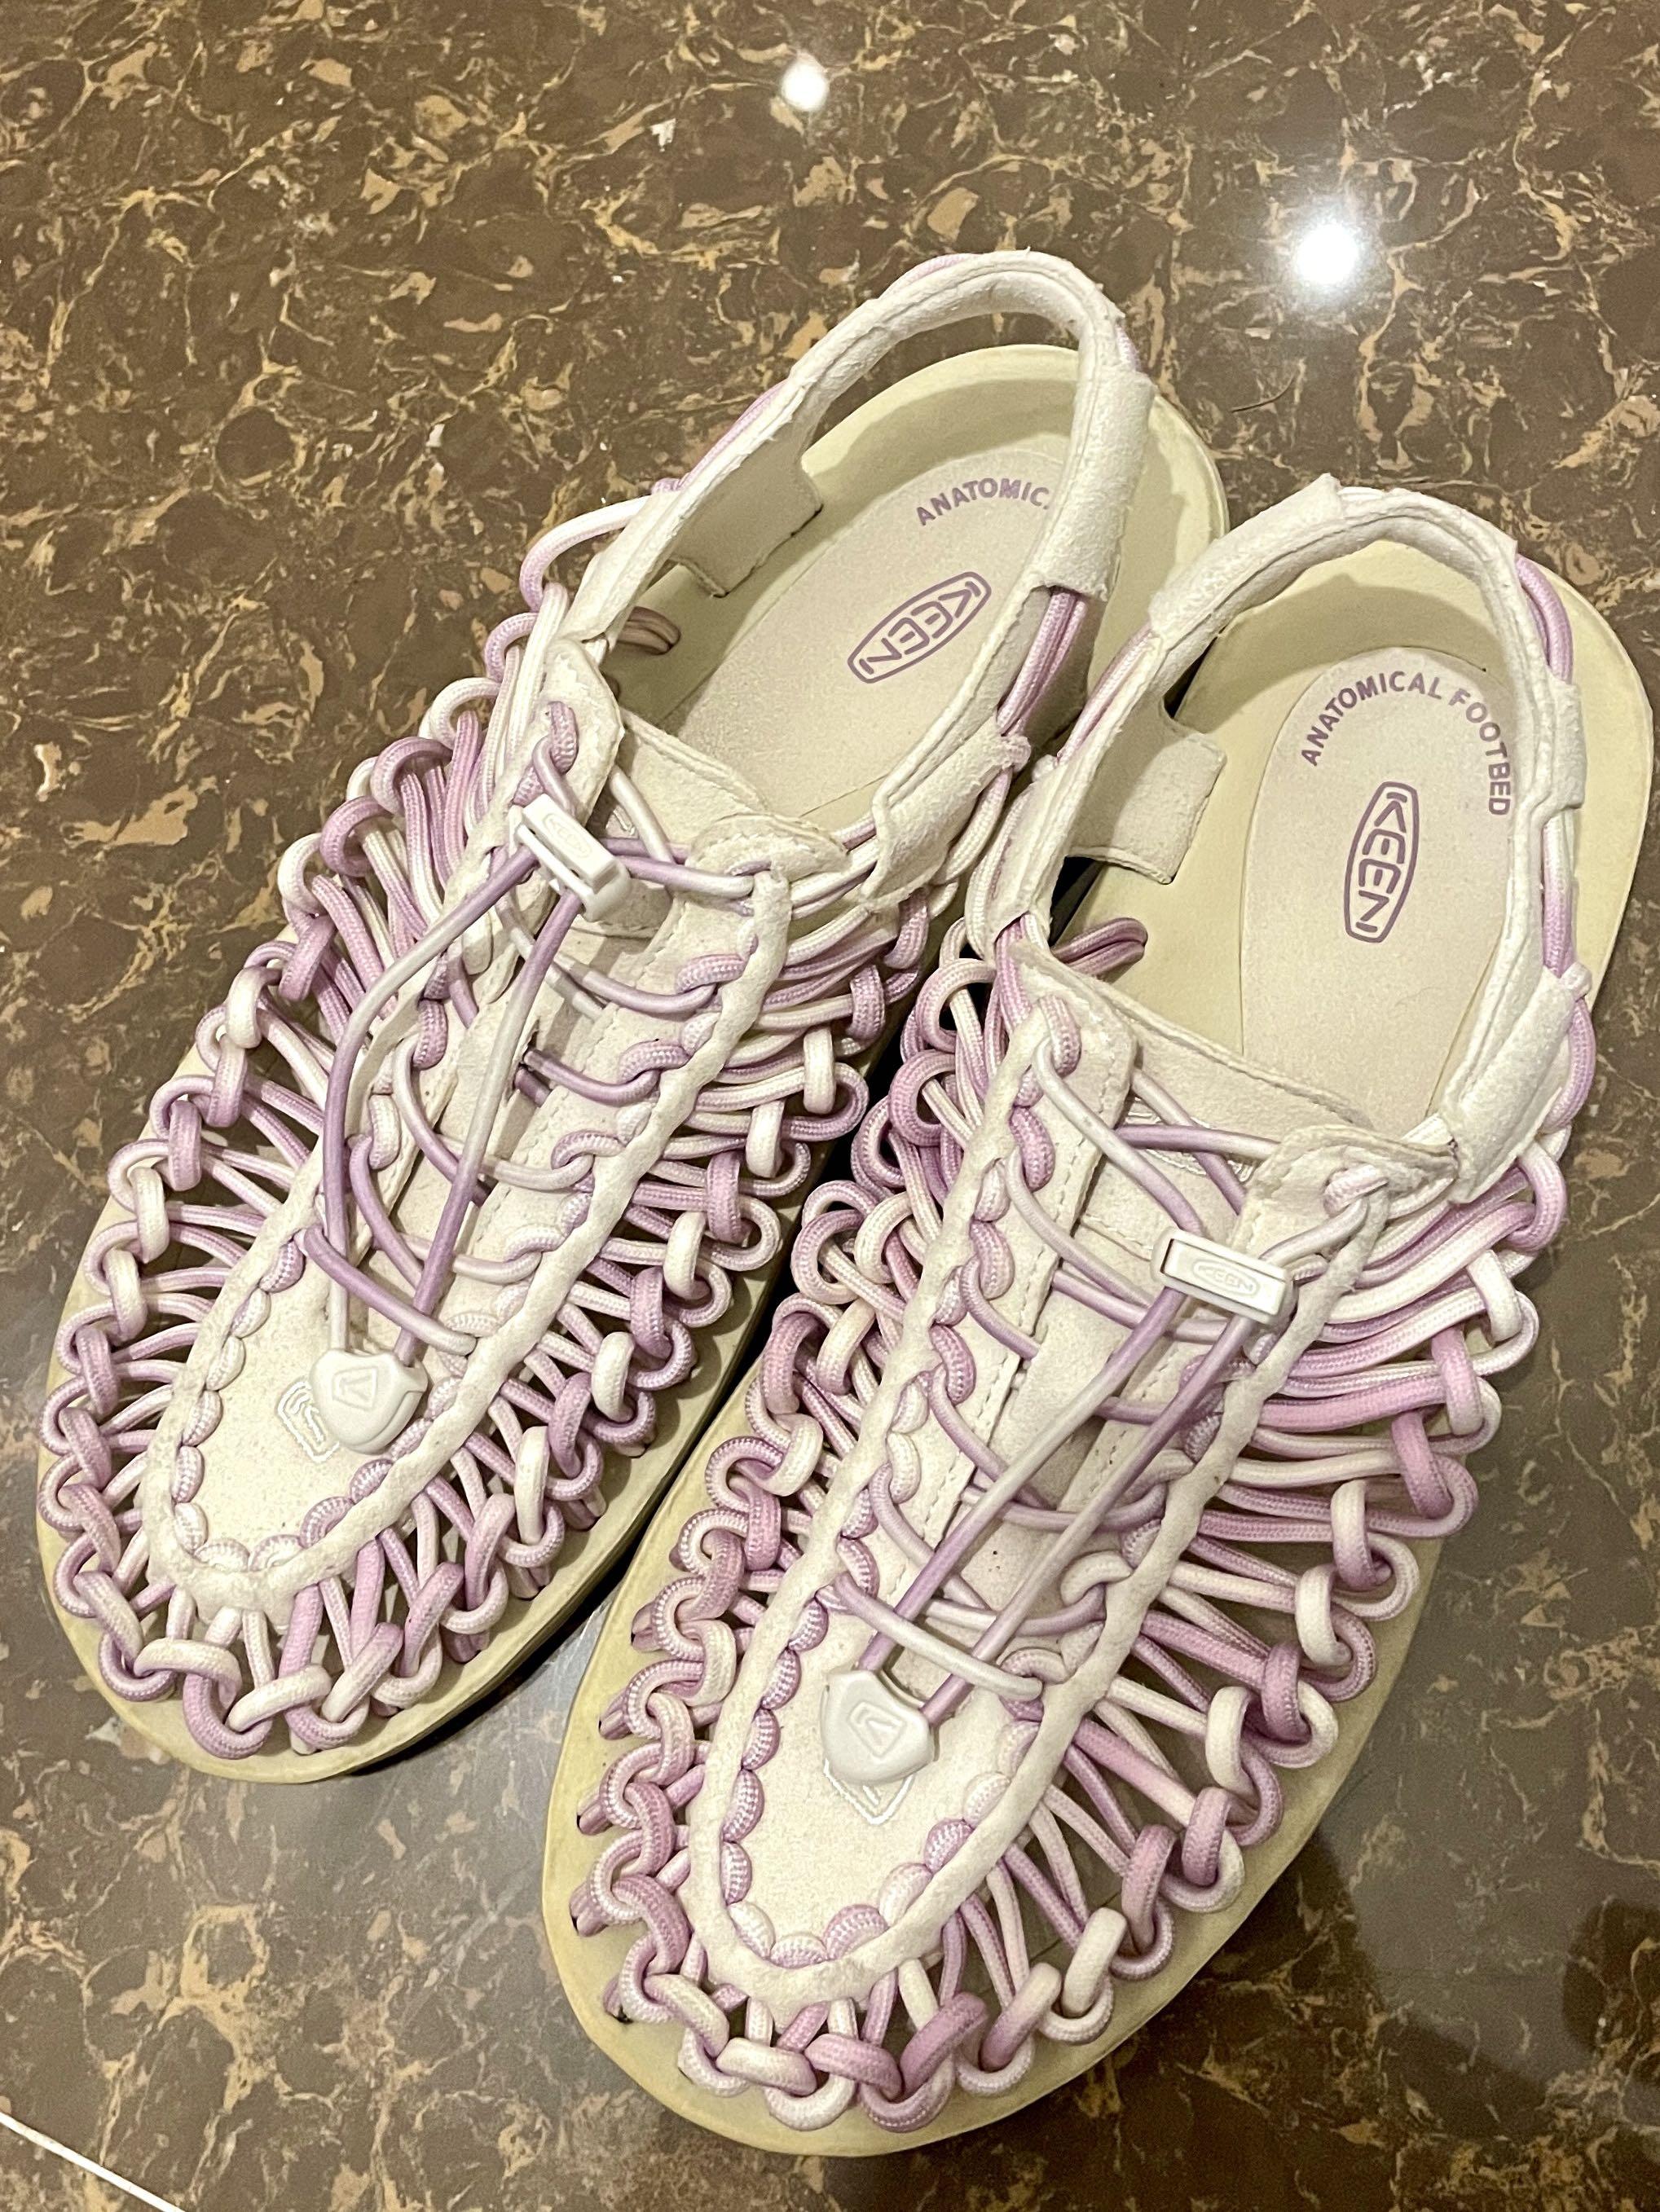 KEEN Uneek dawn pink 淺粉紫色size40, 女裝, 鞋, 涼鞋- Carousell